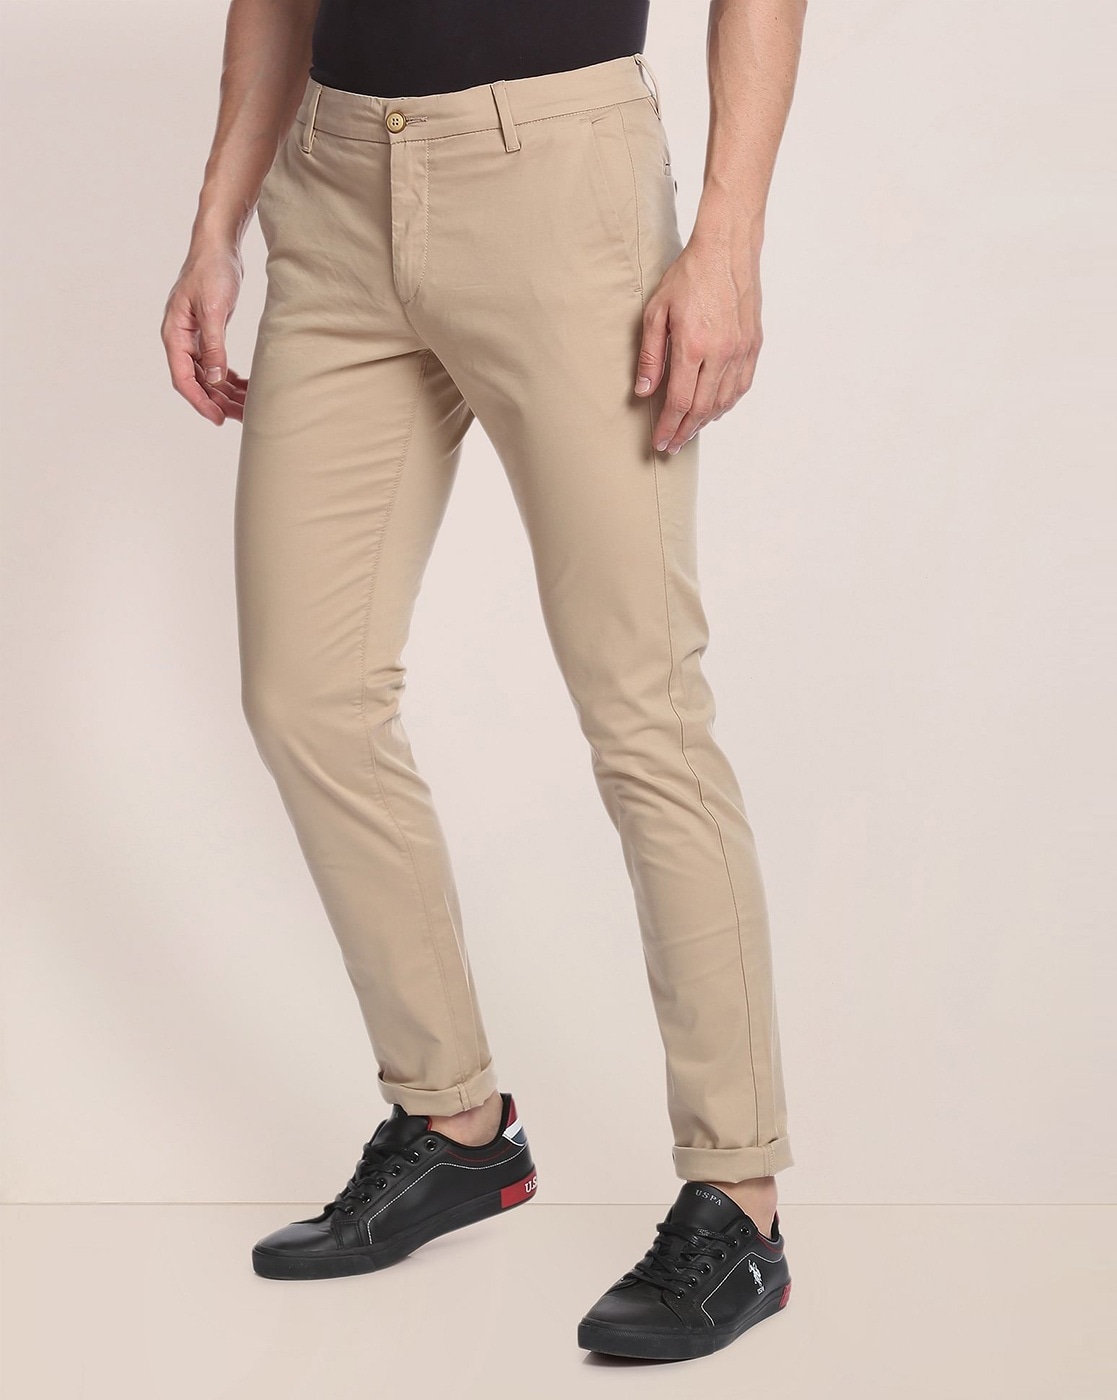 Buy USPA Men's Casual Trousers (8907538491206_USTR6719_30W x 33L_Navy) at  Amazon.in